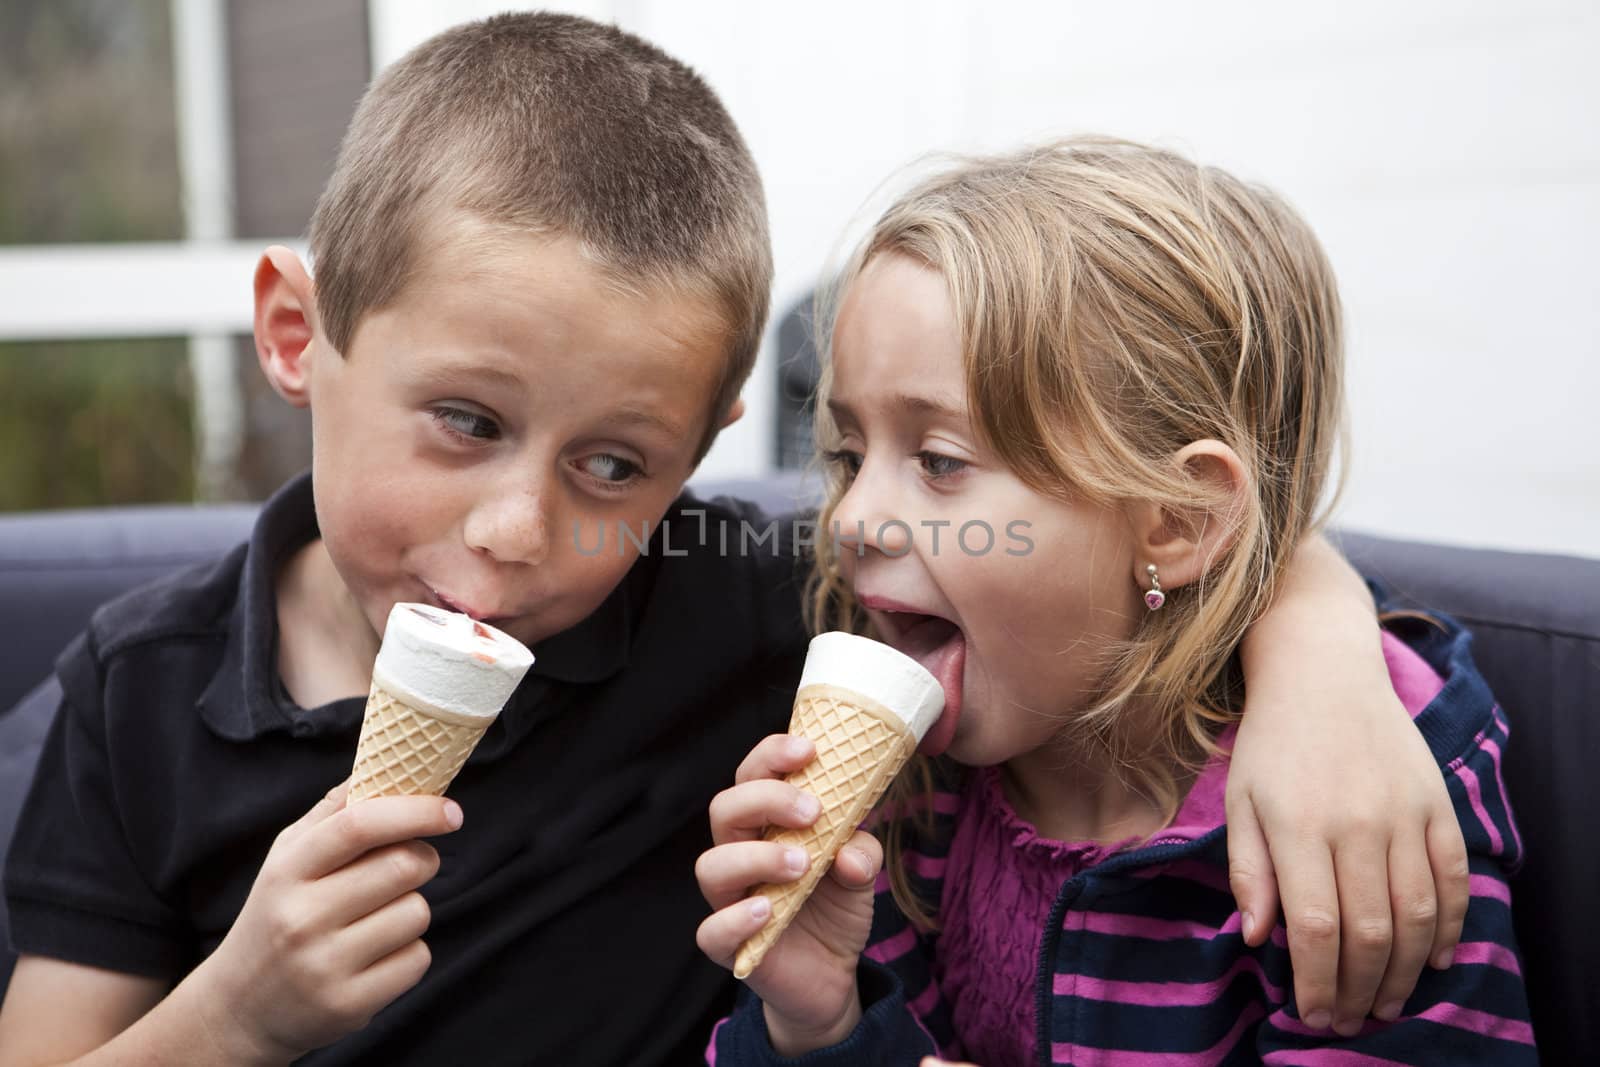 Eating Ice-Cream by gemenacom